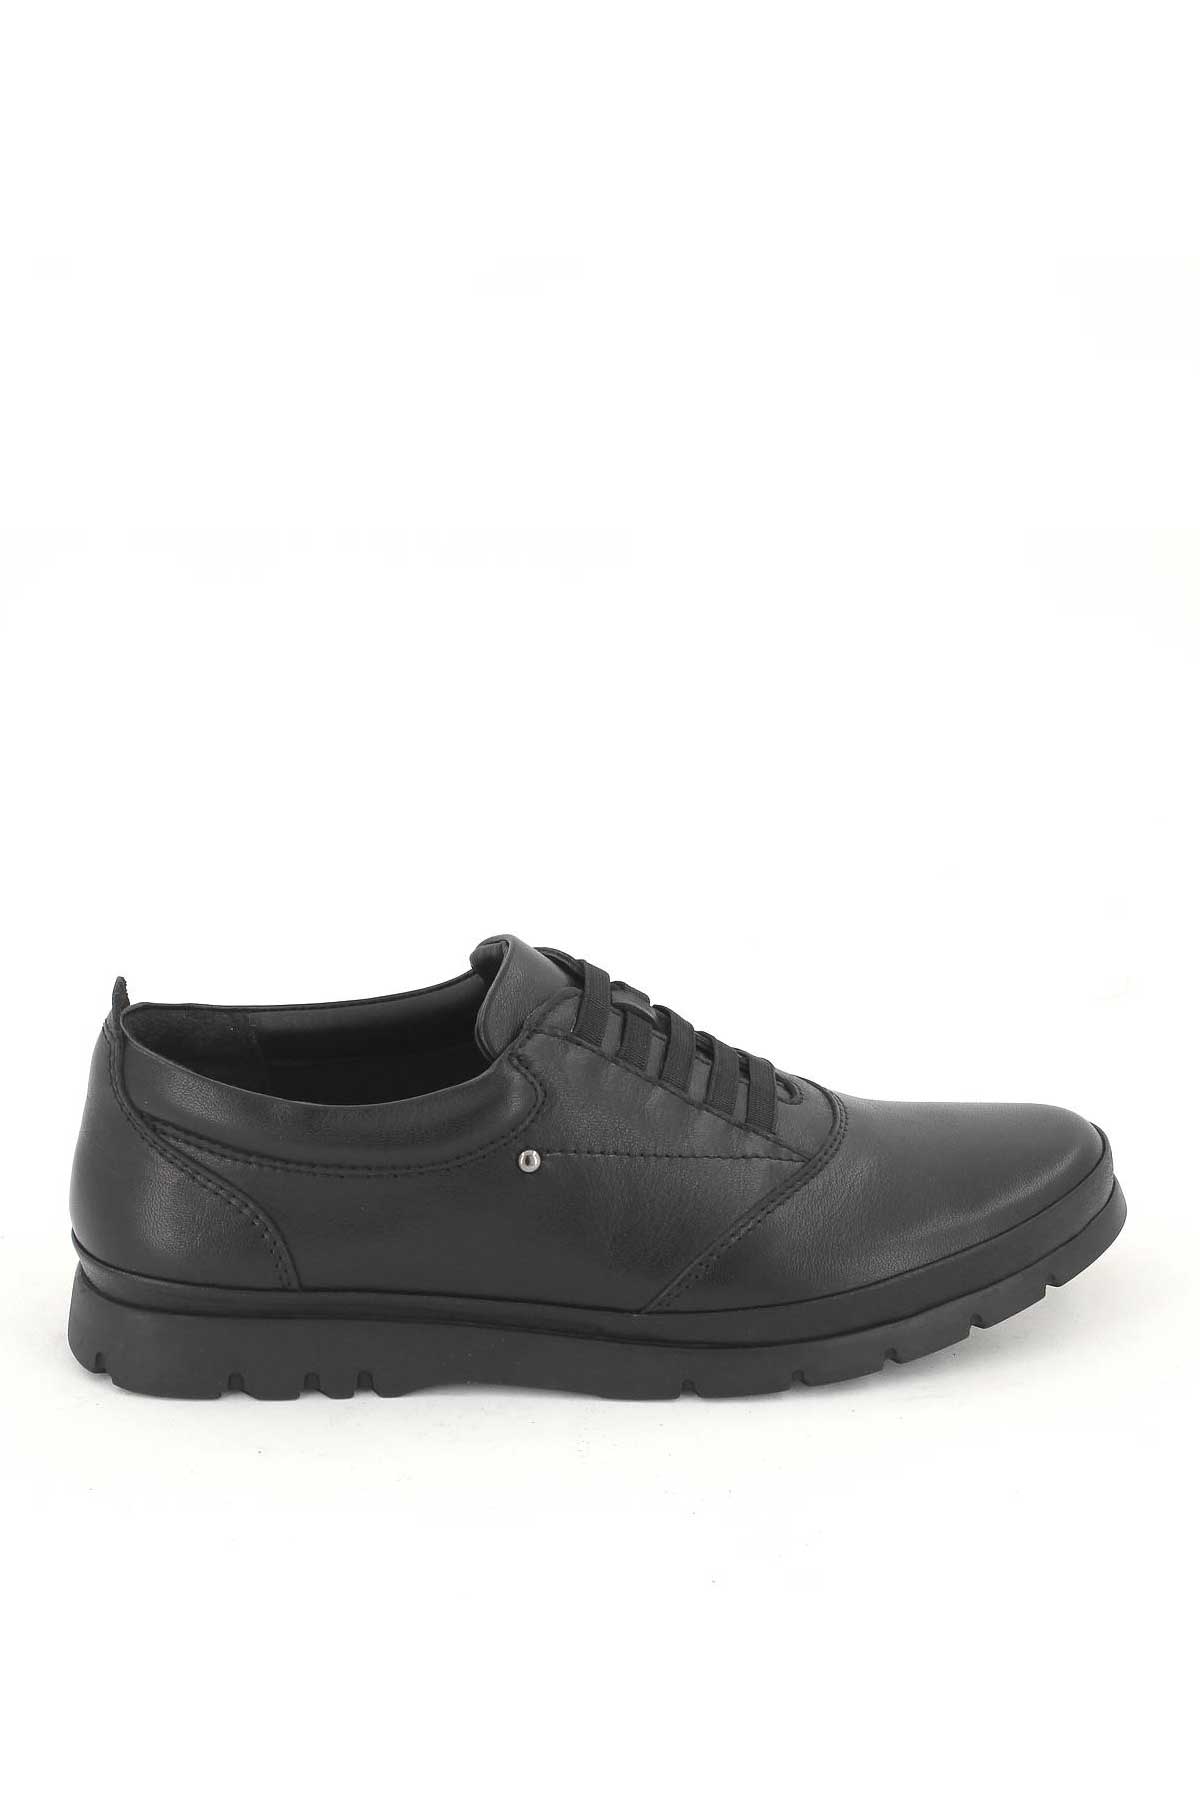 Kadın Comfort Ayakkabı Siyah 1813650K - Thumbnail